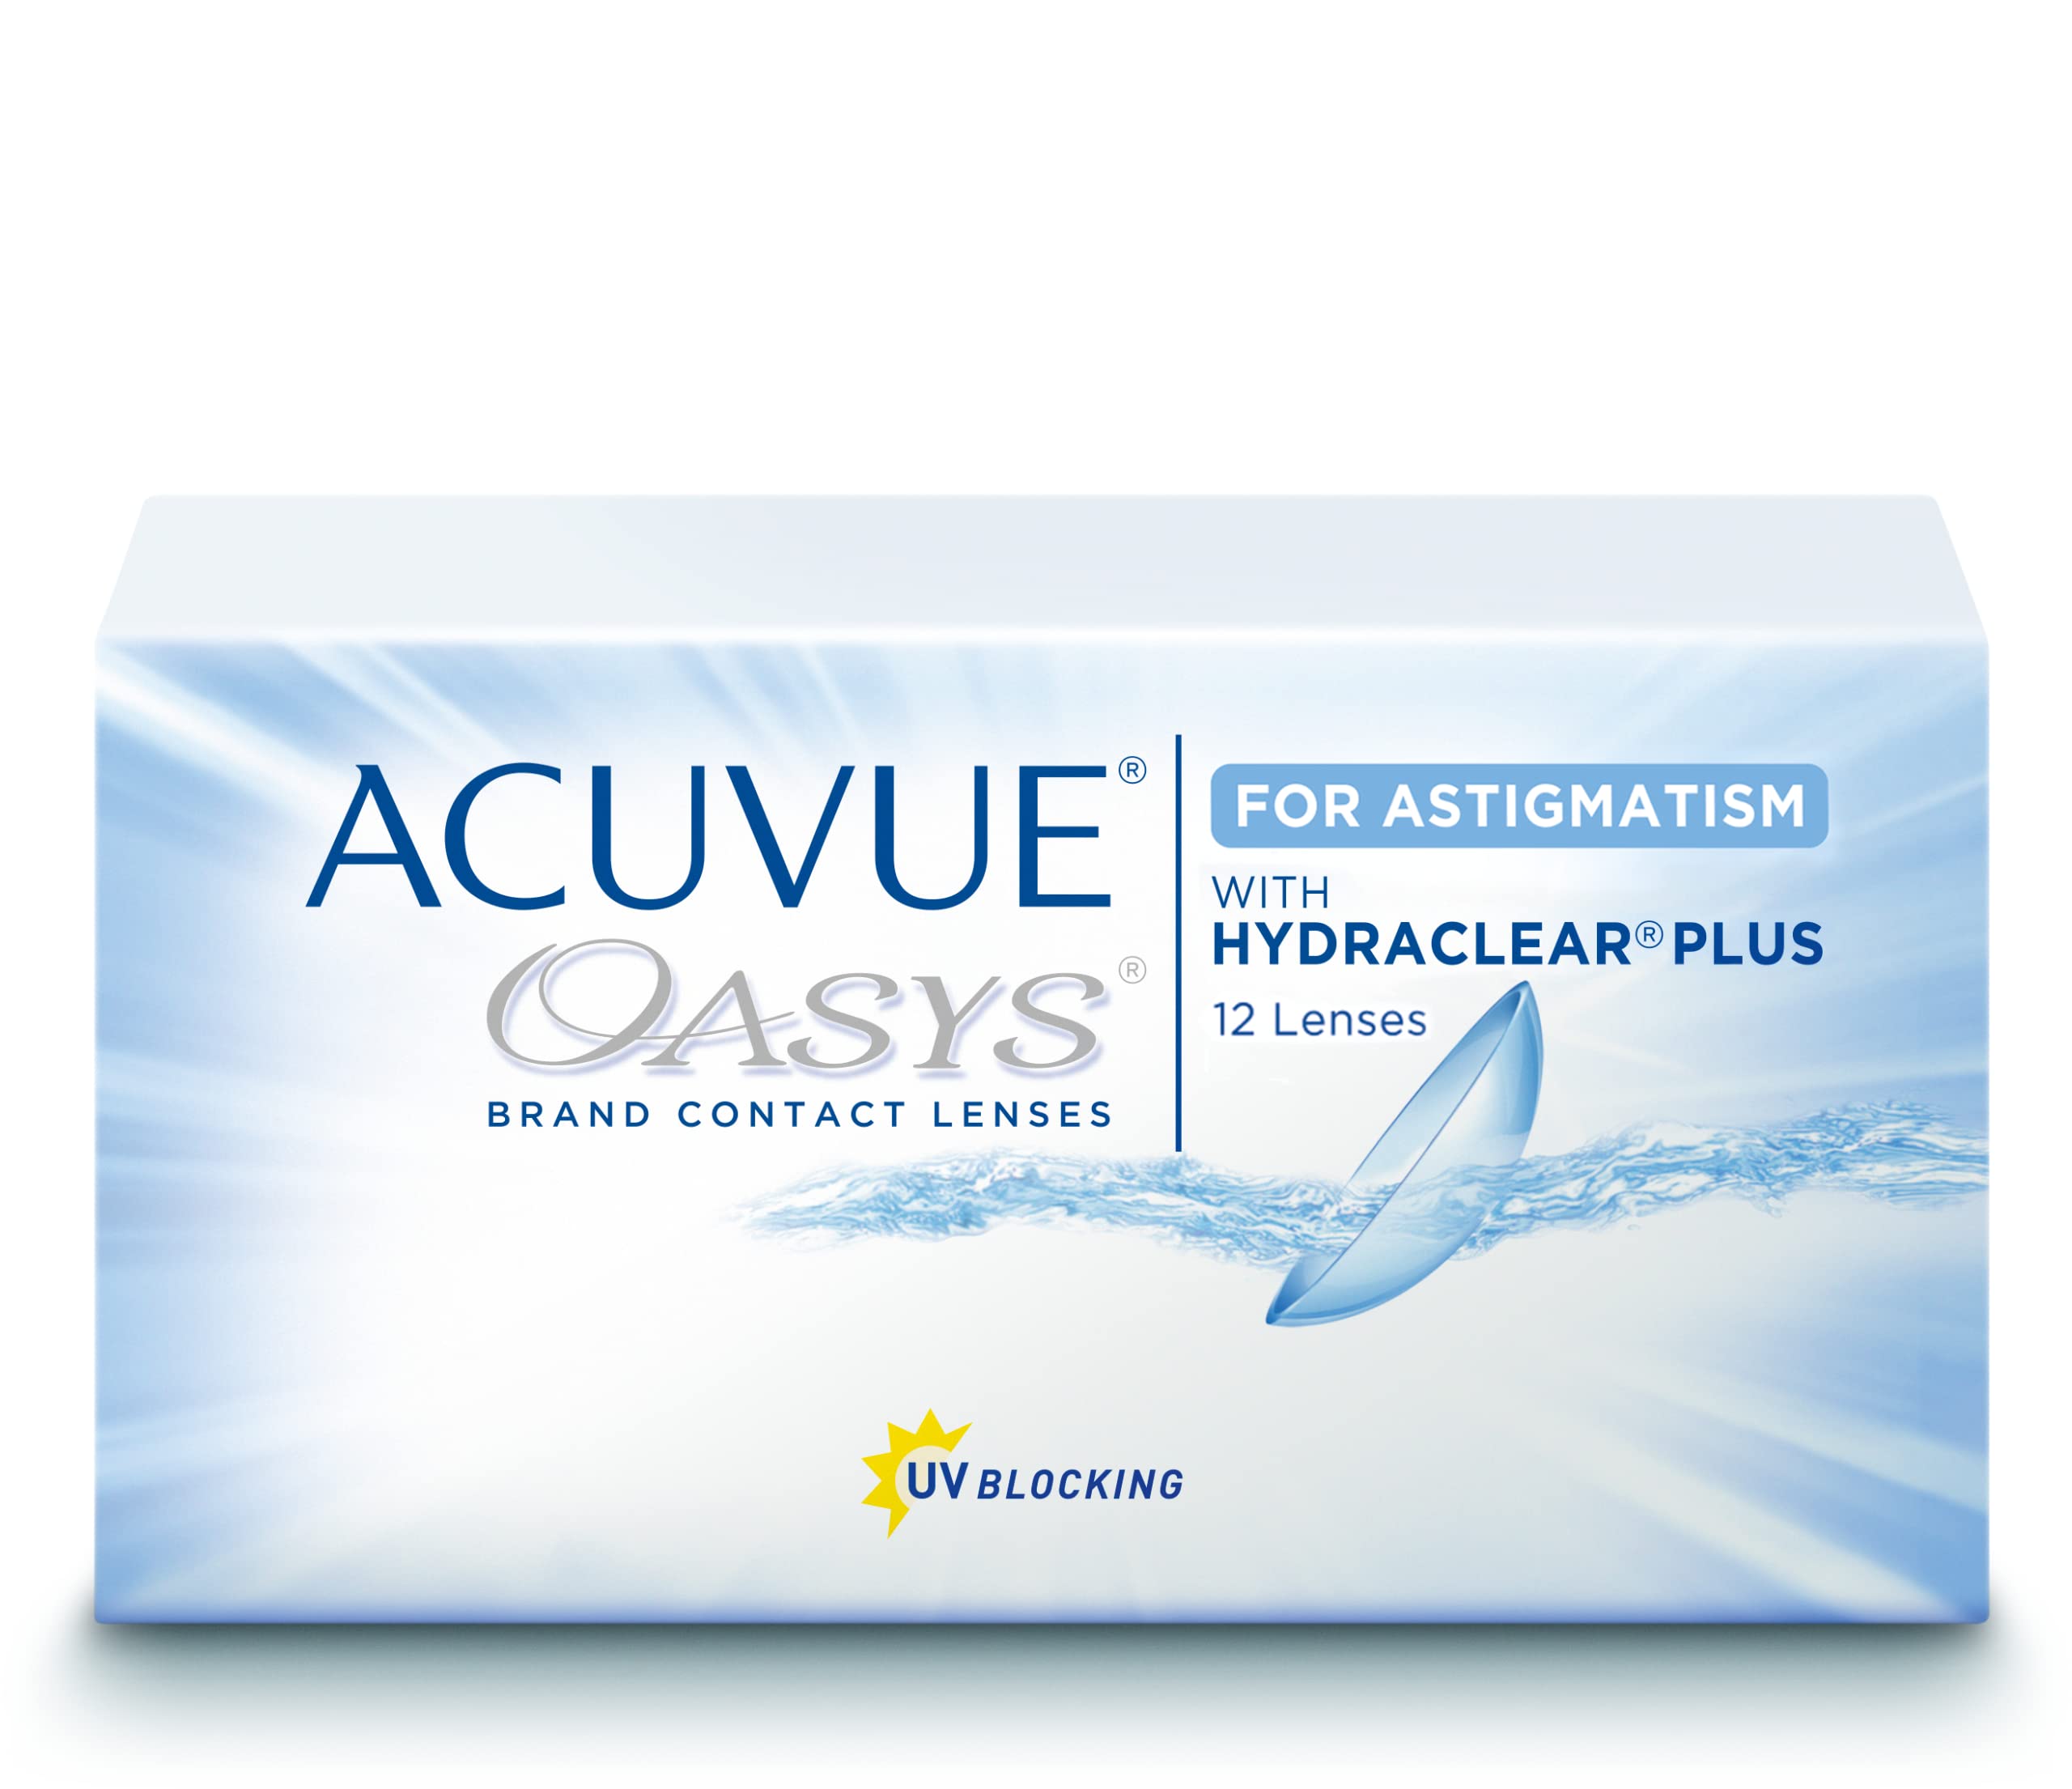 Acuvue Oasys for Astigmatism 2-Wochenlinsen weich, 12 Stück/BC 8.6 mm/DIA 14.5 / CYL -2.75 / Achse 10 / -9 Dioptrien